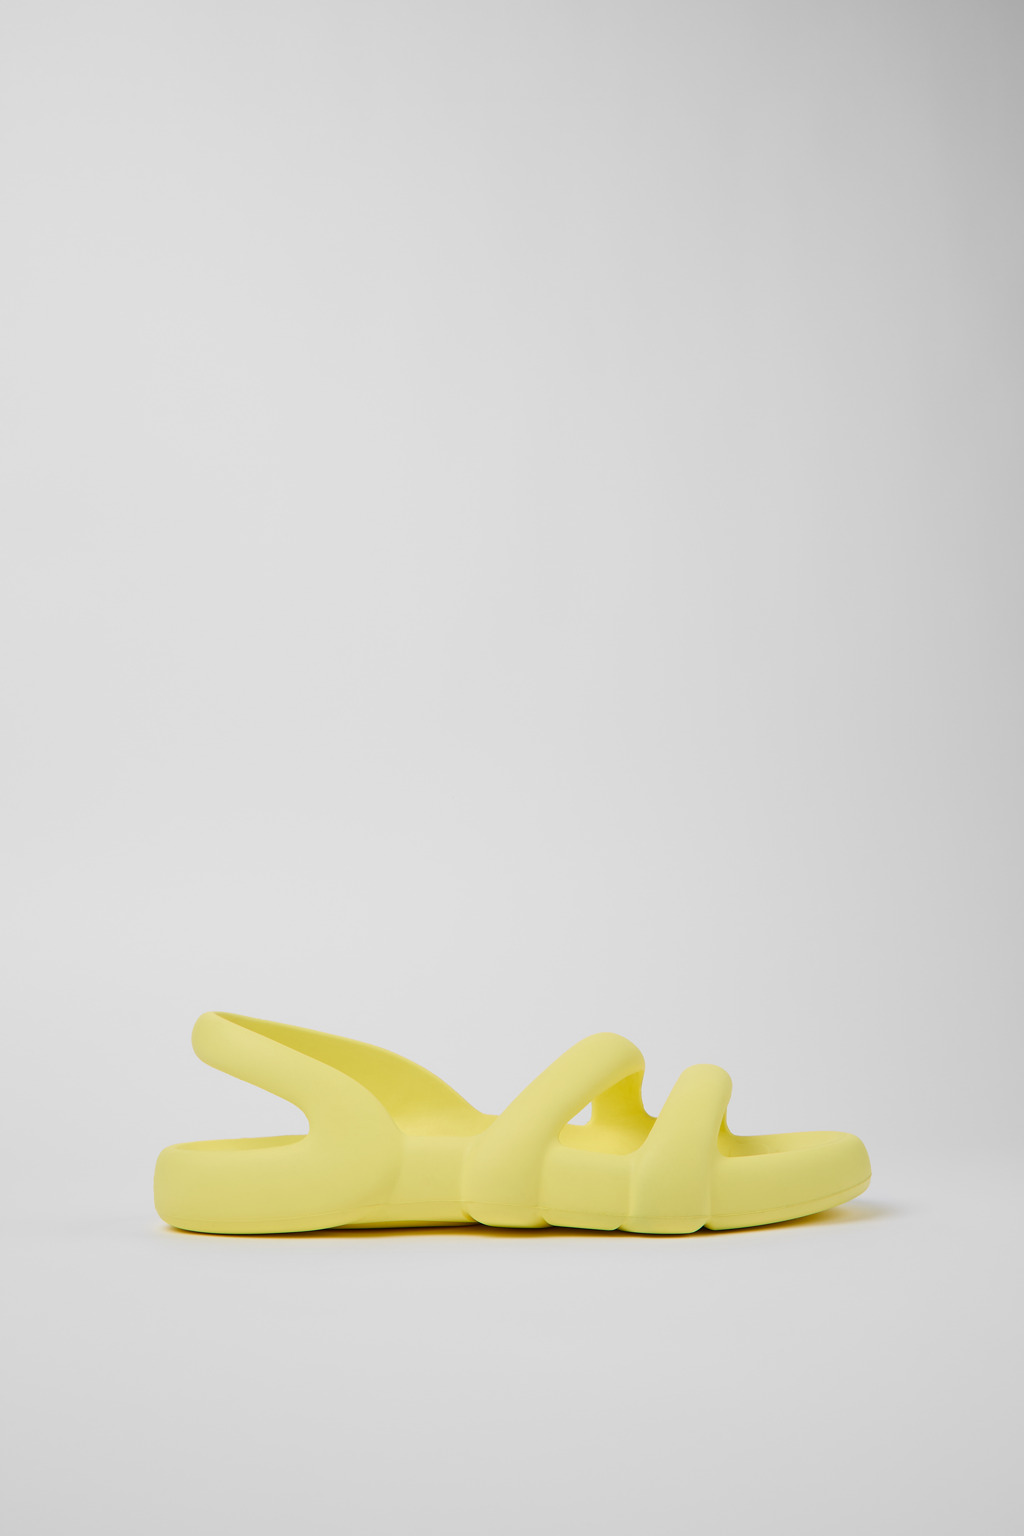 Kobarah Yellow Sandals for Men - Spring/Summer collection - Camper USA